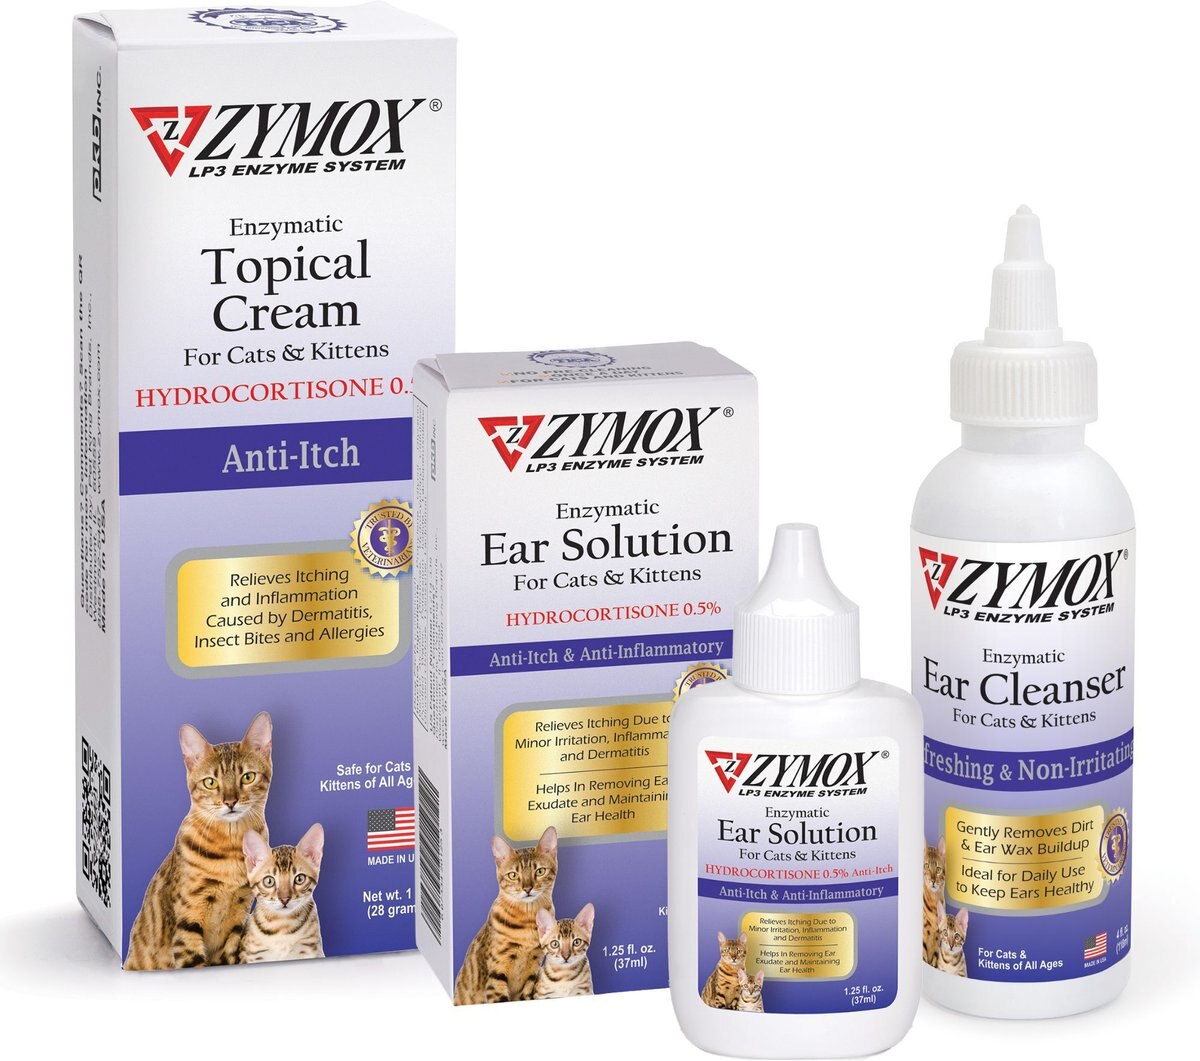 Zymox Enzymatic Cat and Kitten Ear Cleanser， 1-oz tube